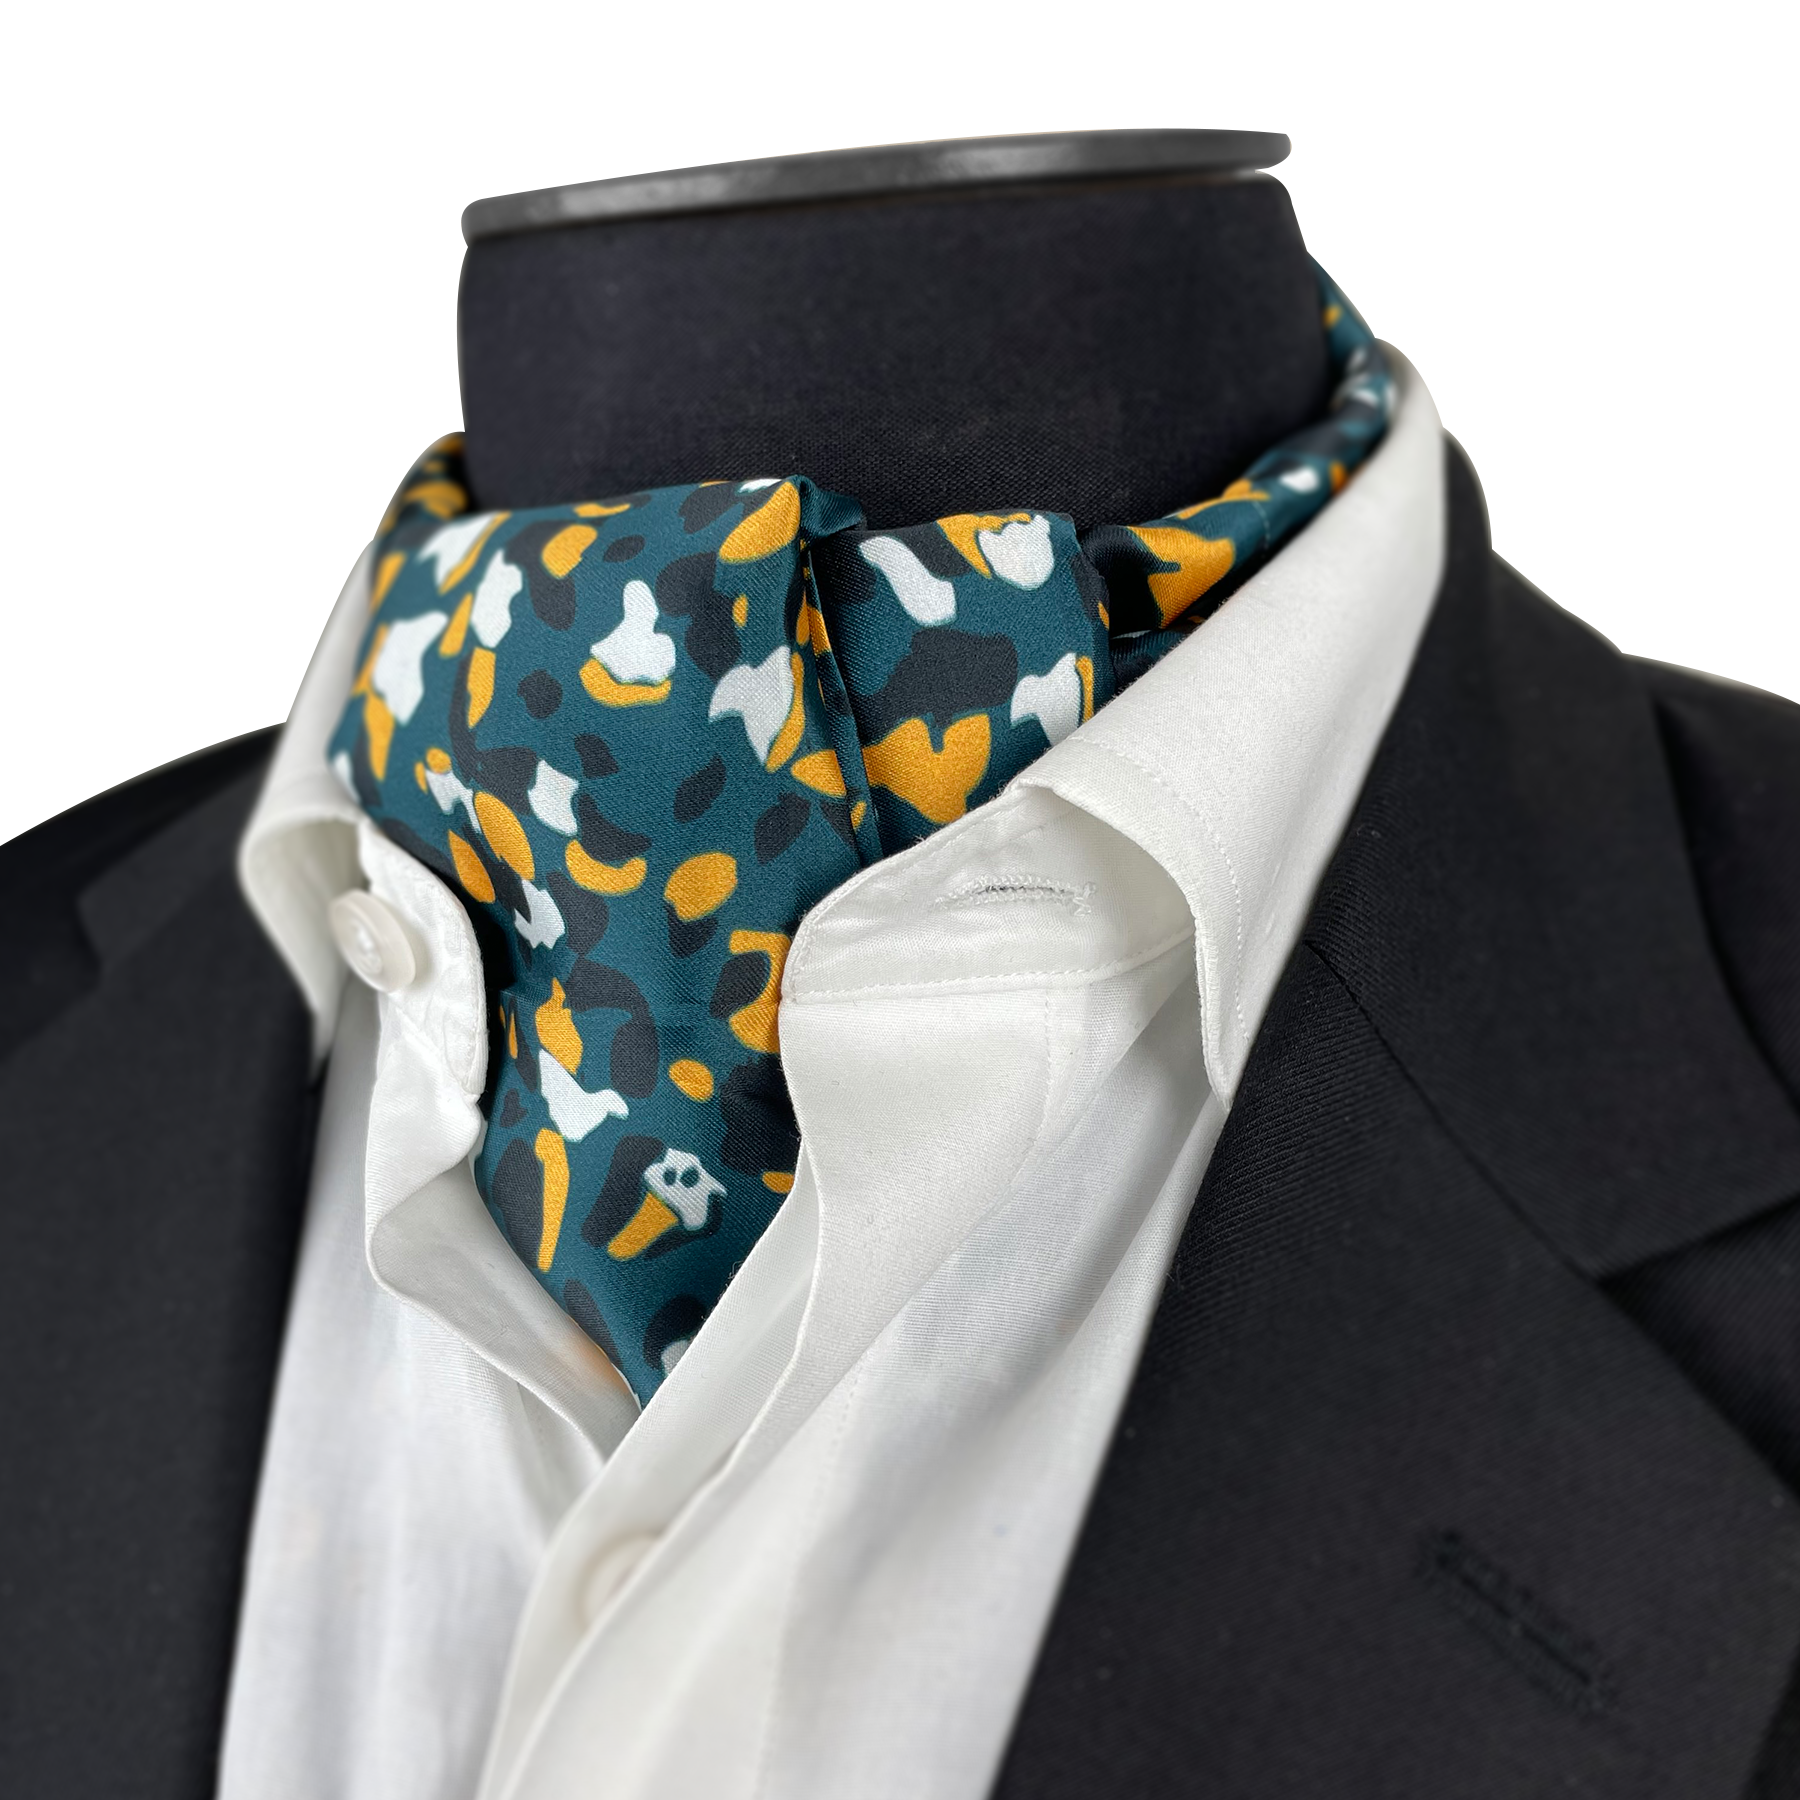 The Army Green Silk Cravat